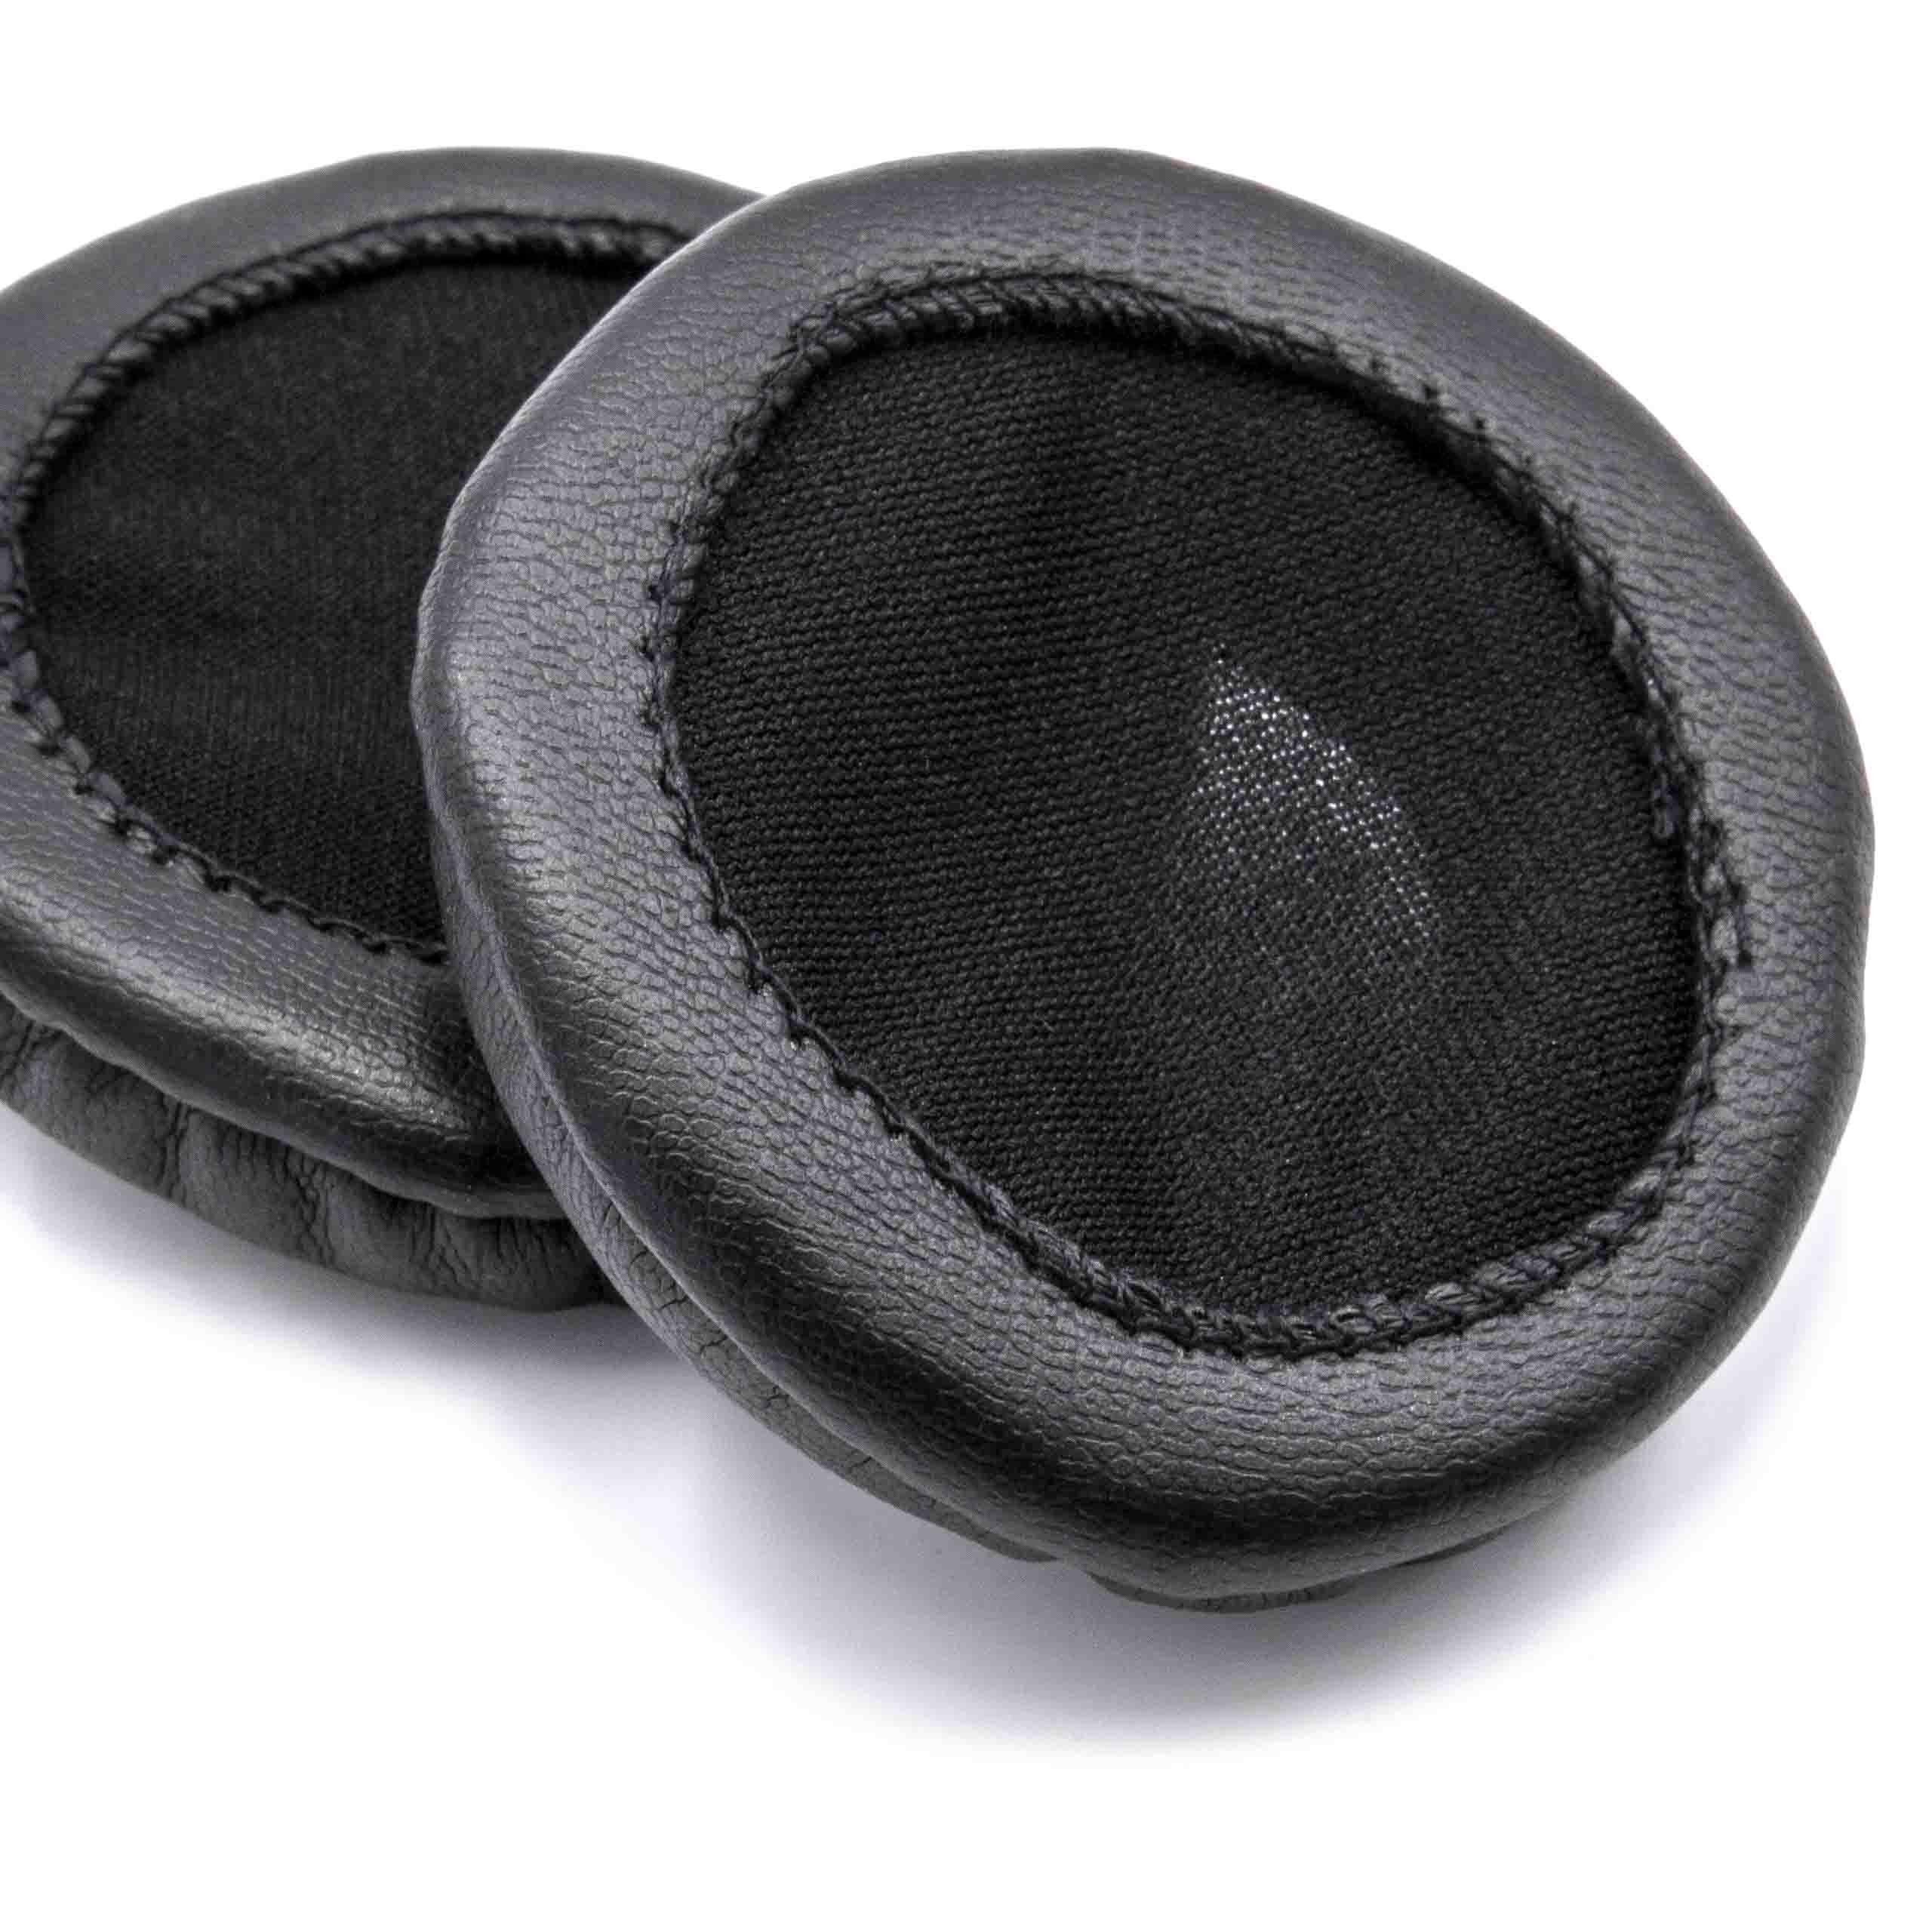 die vhbw Ohrpolster benötigen 60mm Ohrpolster Kopfhörer für passend Kopfhörer,